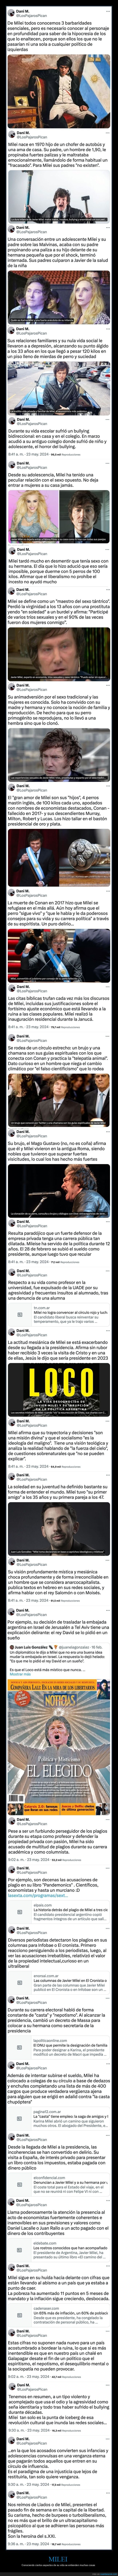 milei,argentina,políticos